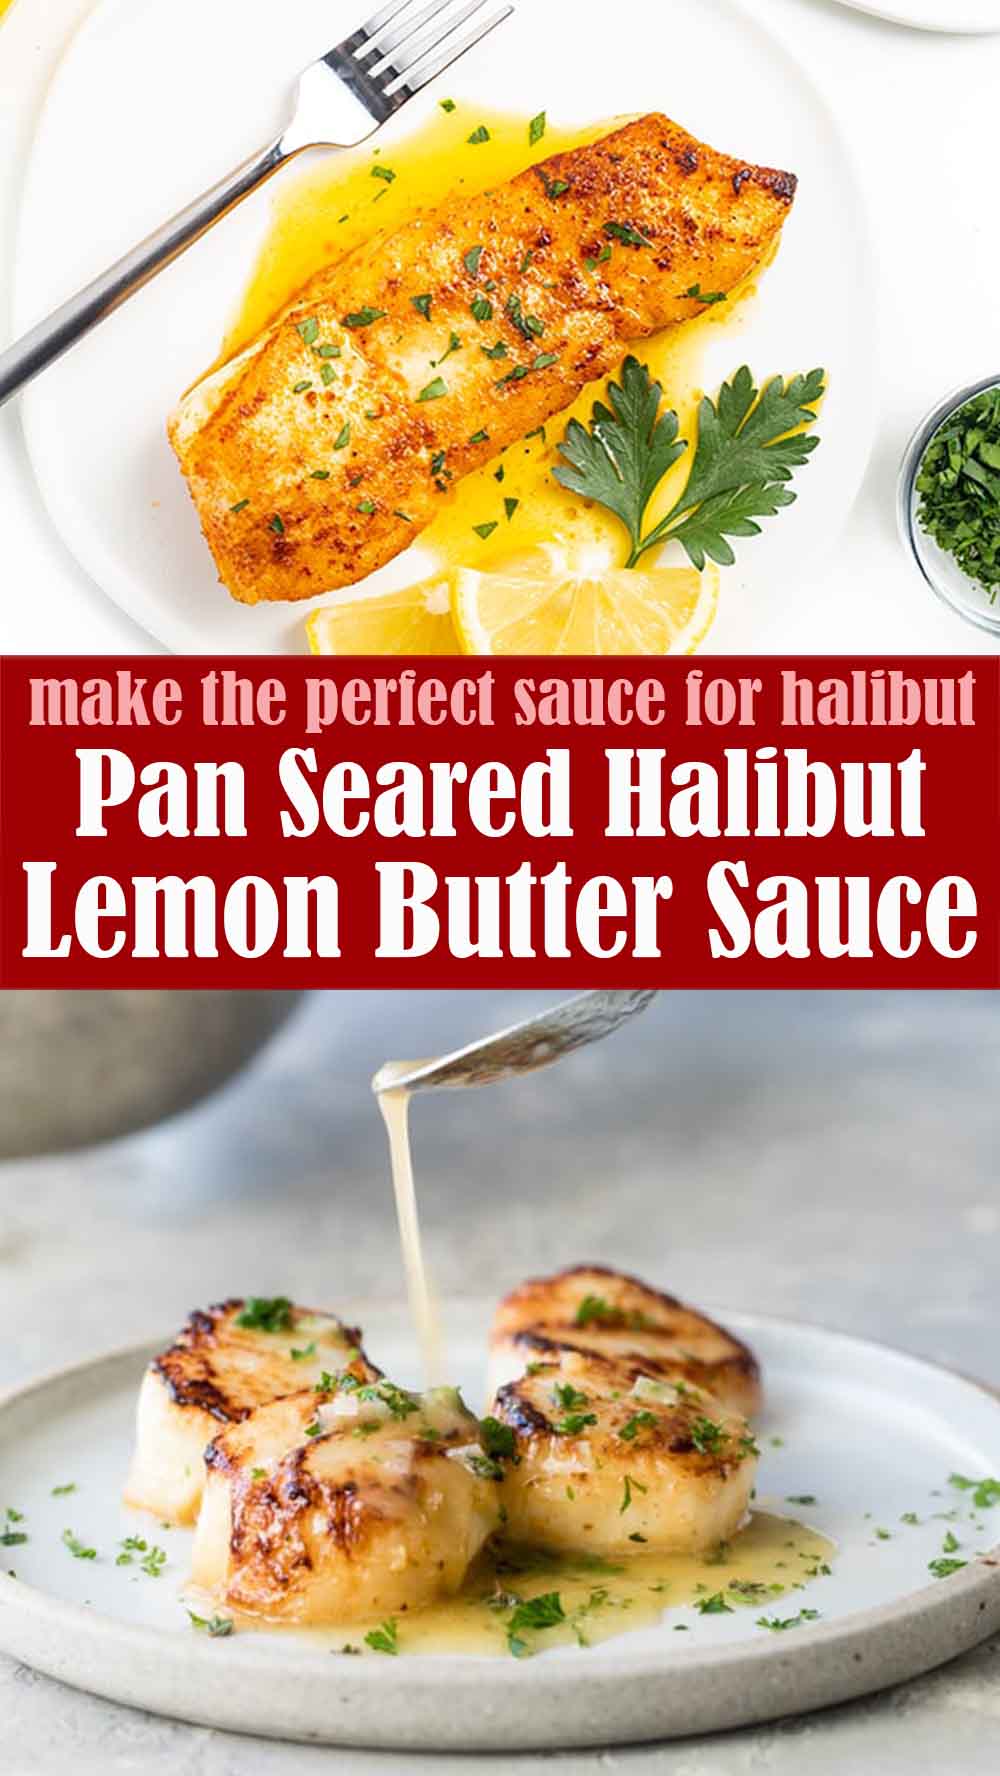 Pan Seared Halibut with Lemon Butter Sauce